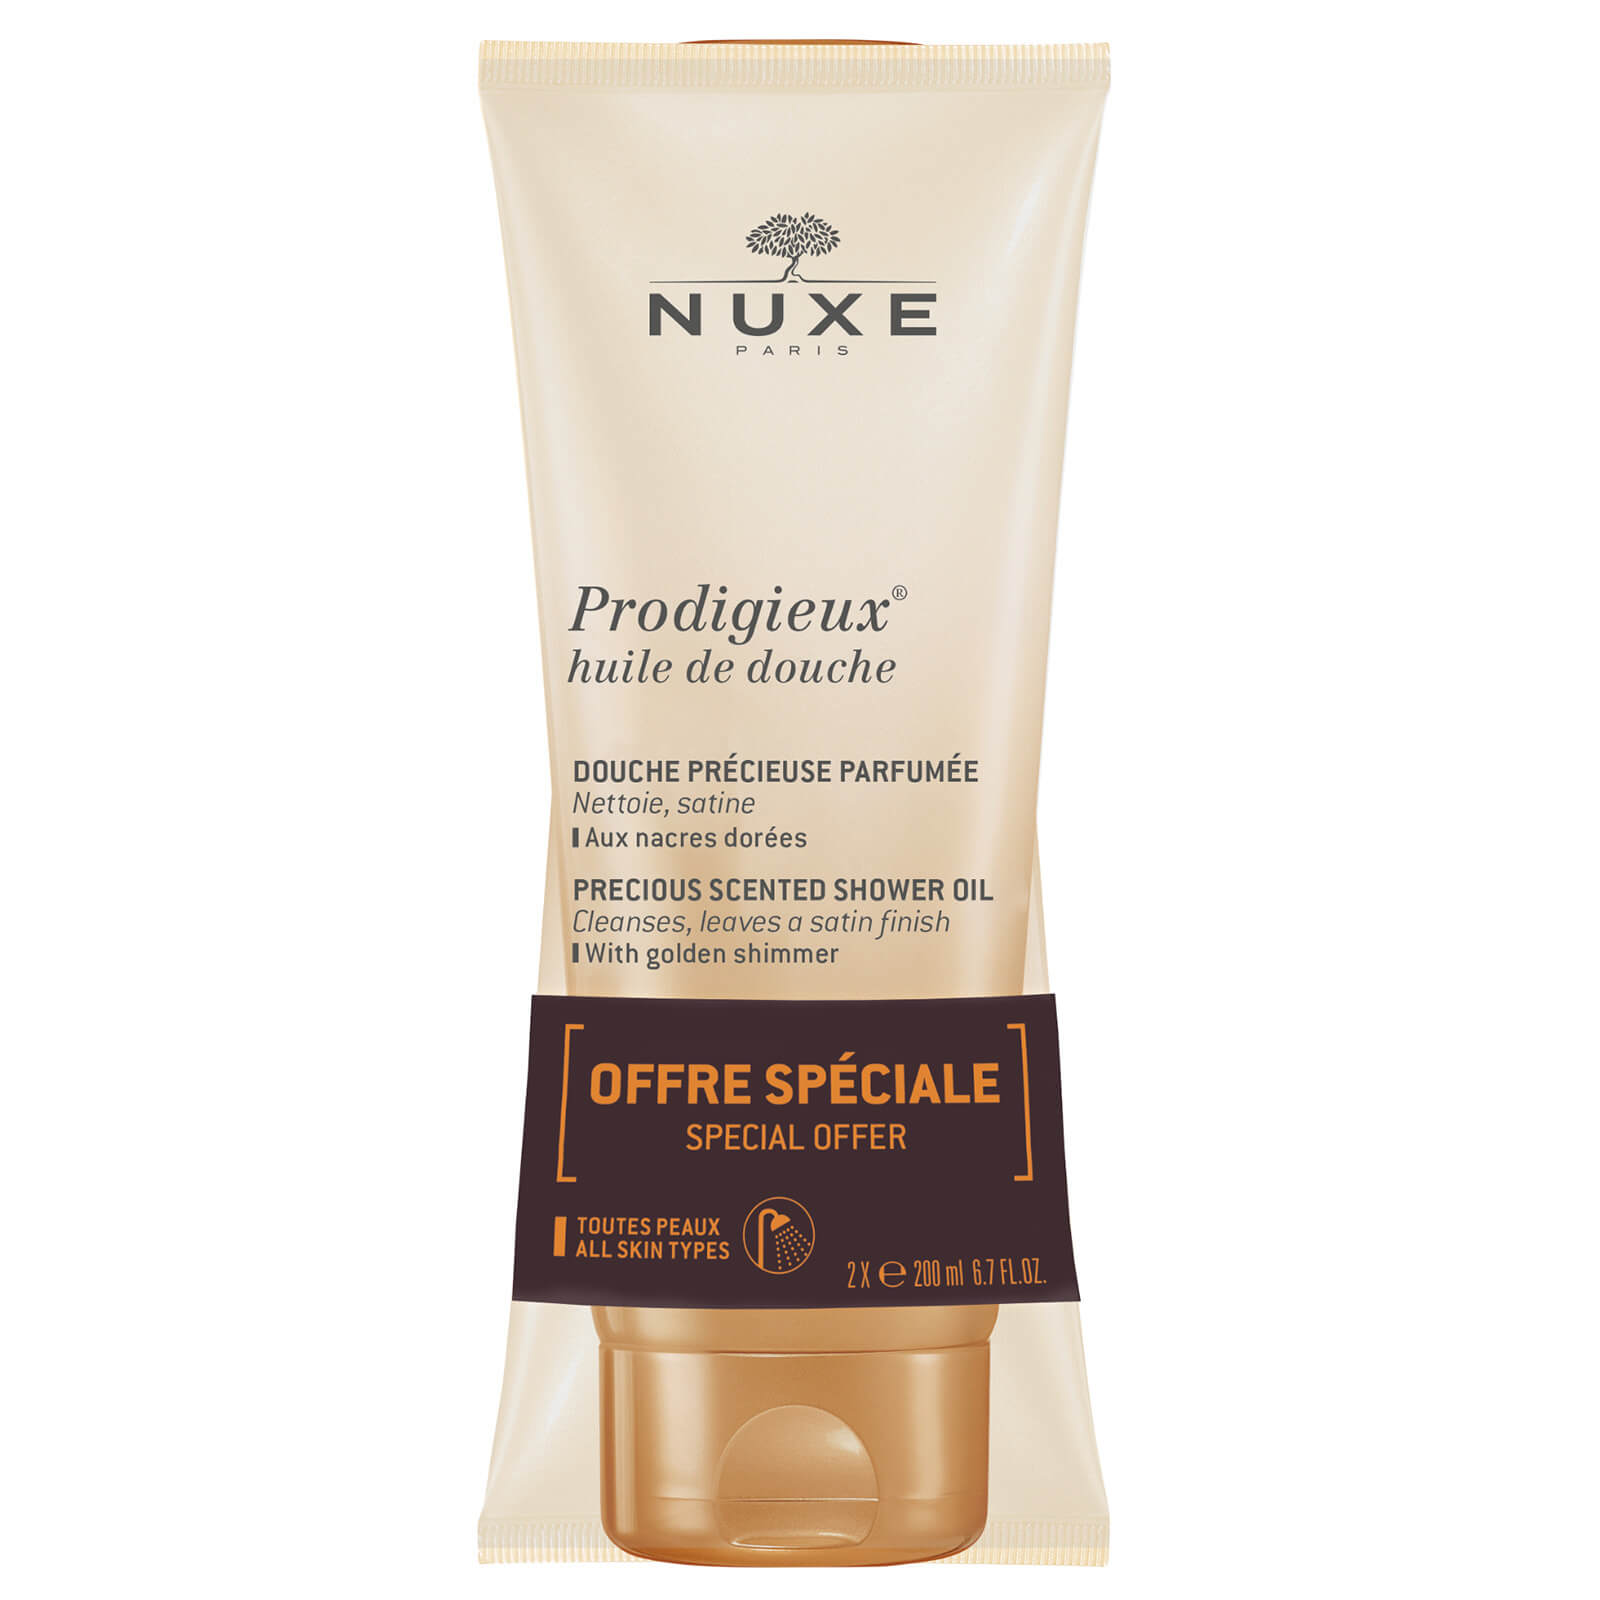 NUXE Prodigieux® Shower Oil Duo 2x200ml lookfantastic.com imagine